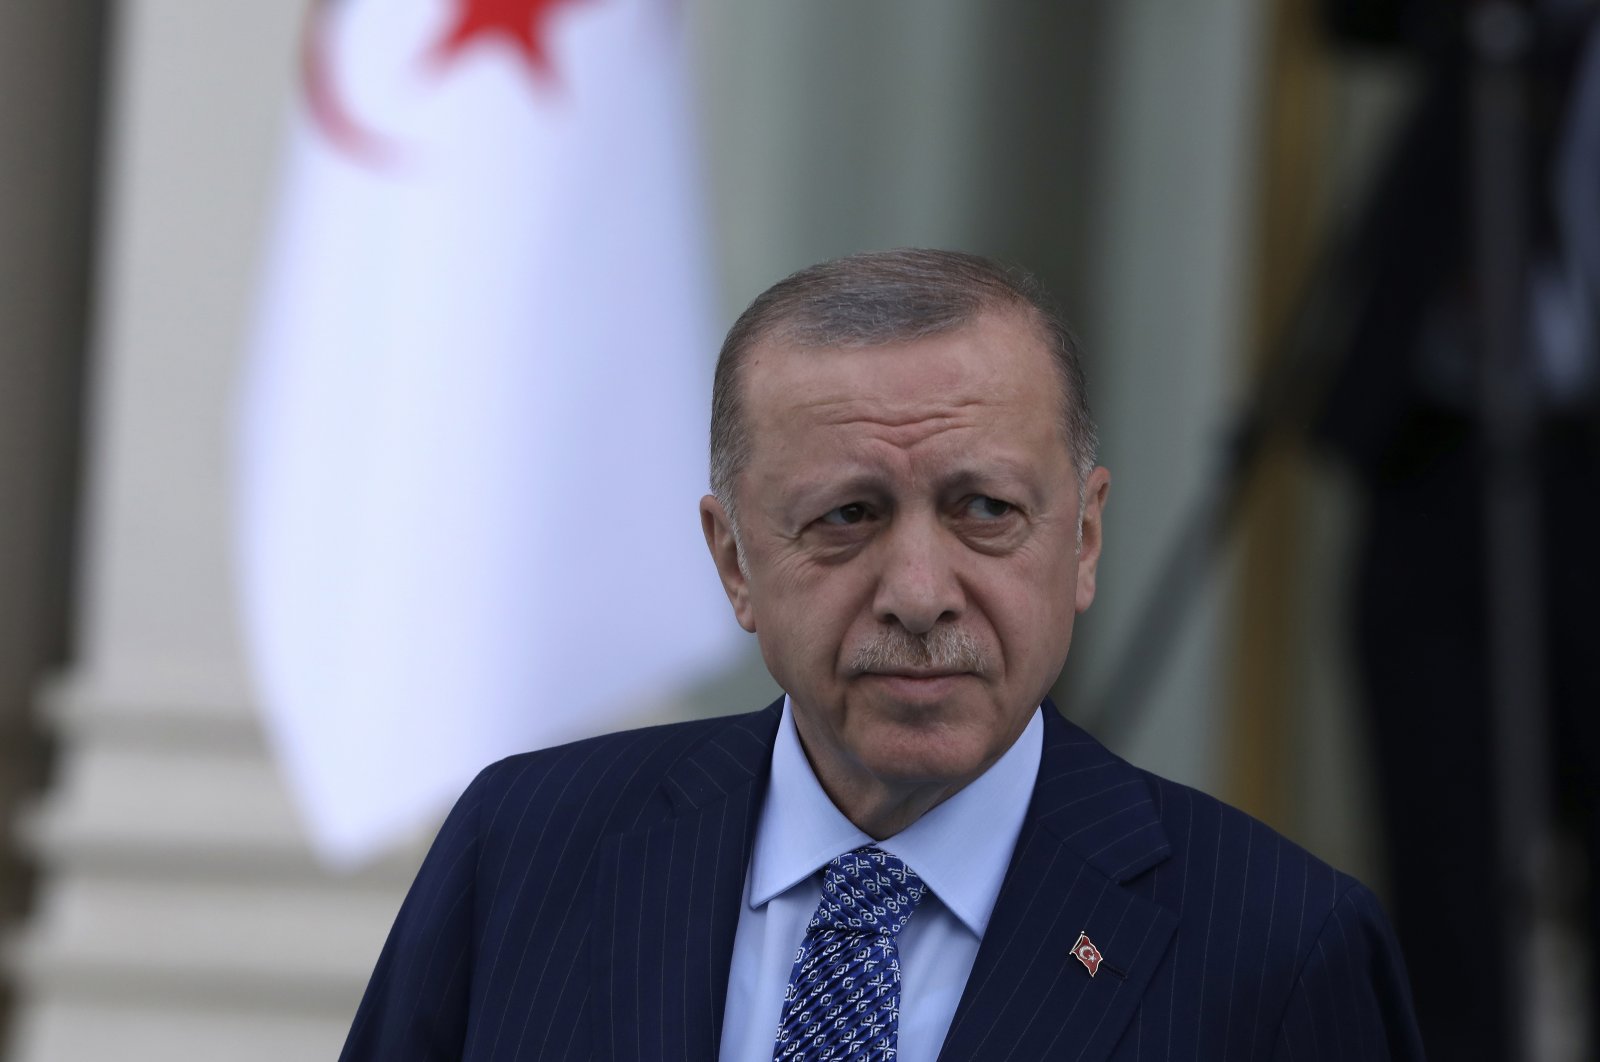 President Recep Tayyip Erdoğan arrives for a ceremony, in Ankara, Turkey, May 16, 2022. (AP Photo)